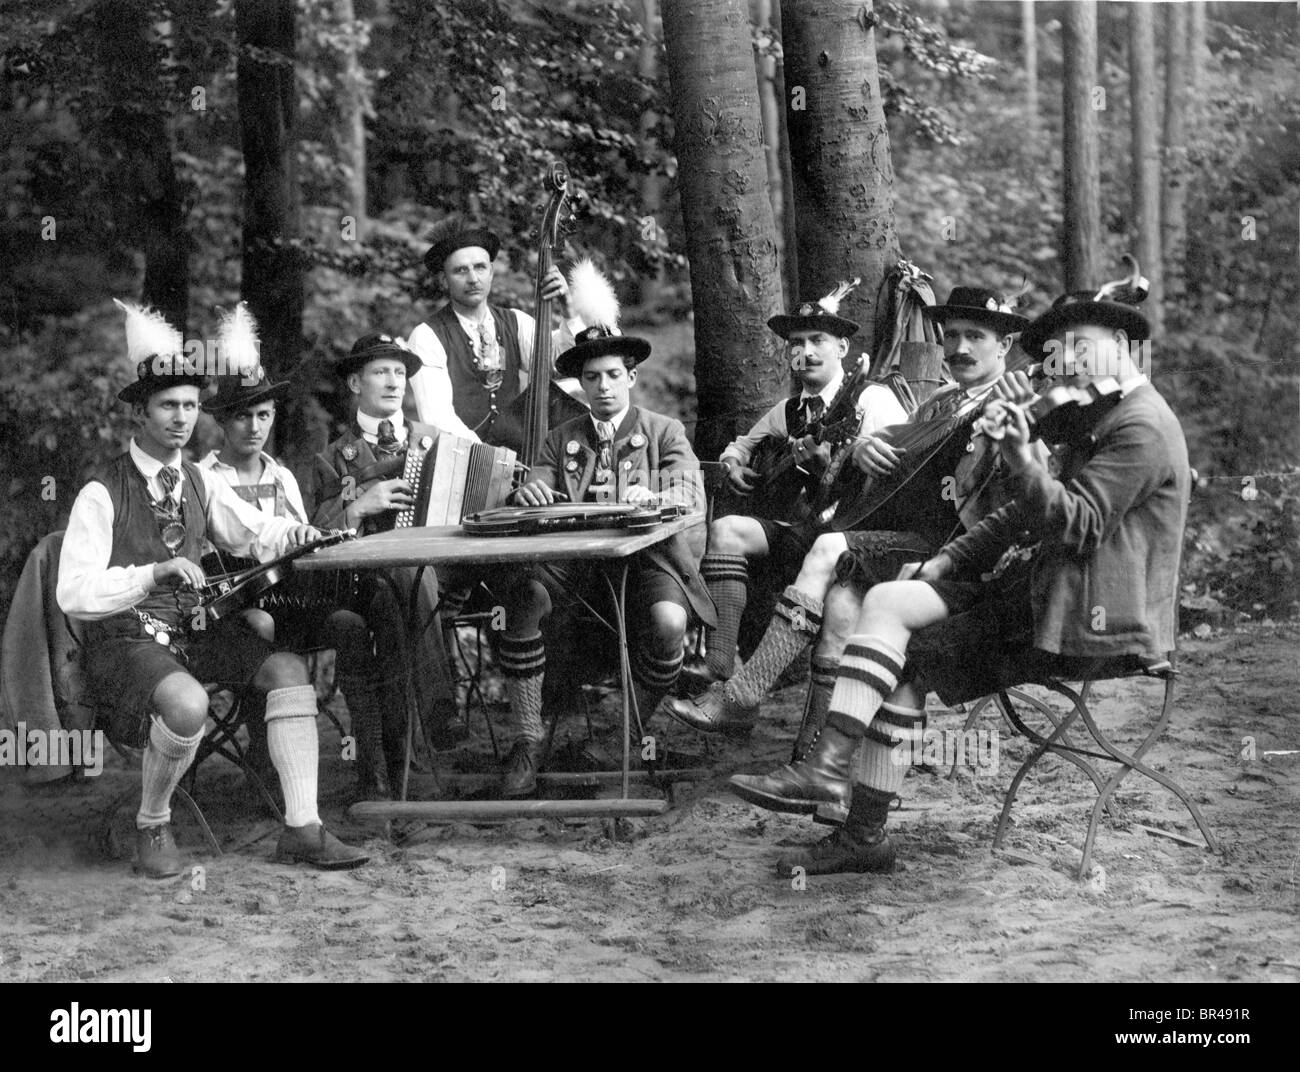 Historical image, folk musicians, ca. 1922 Stock Photo